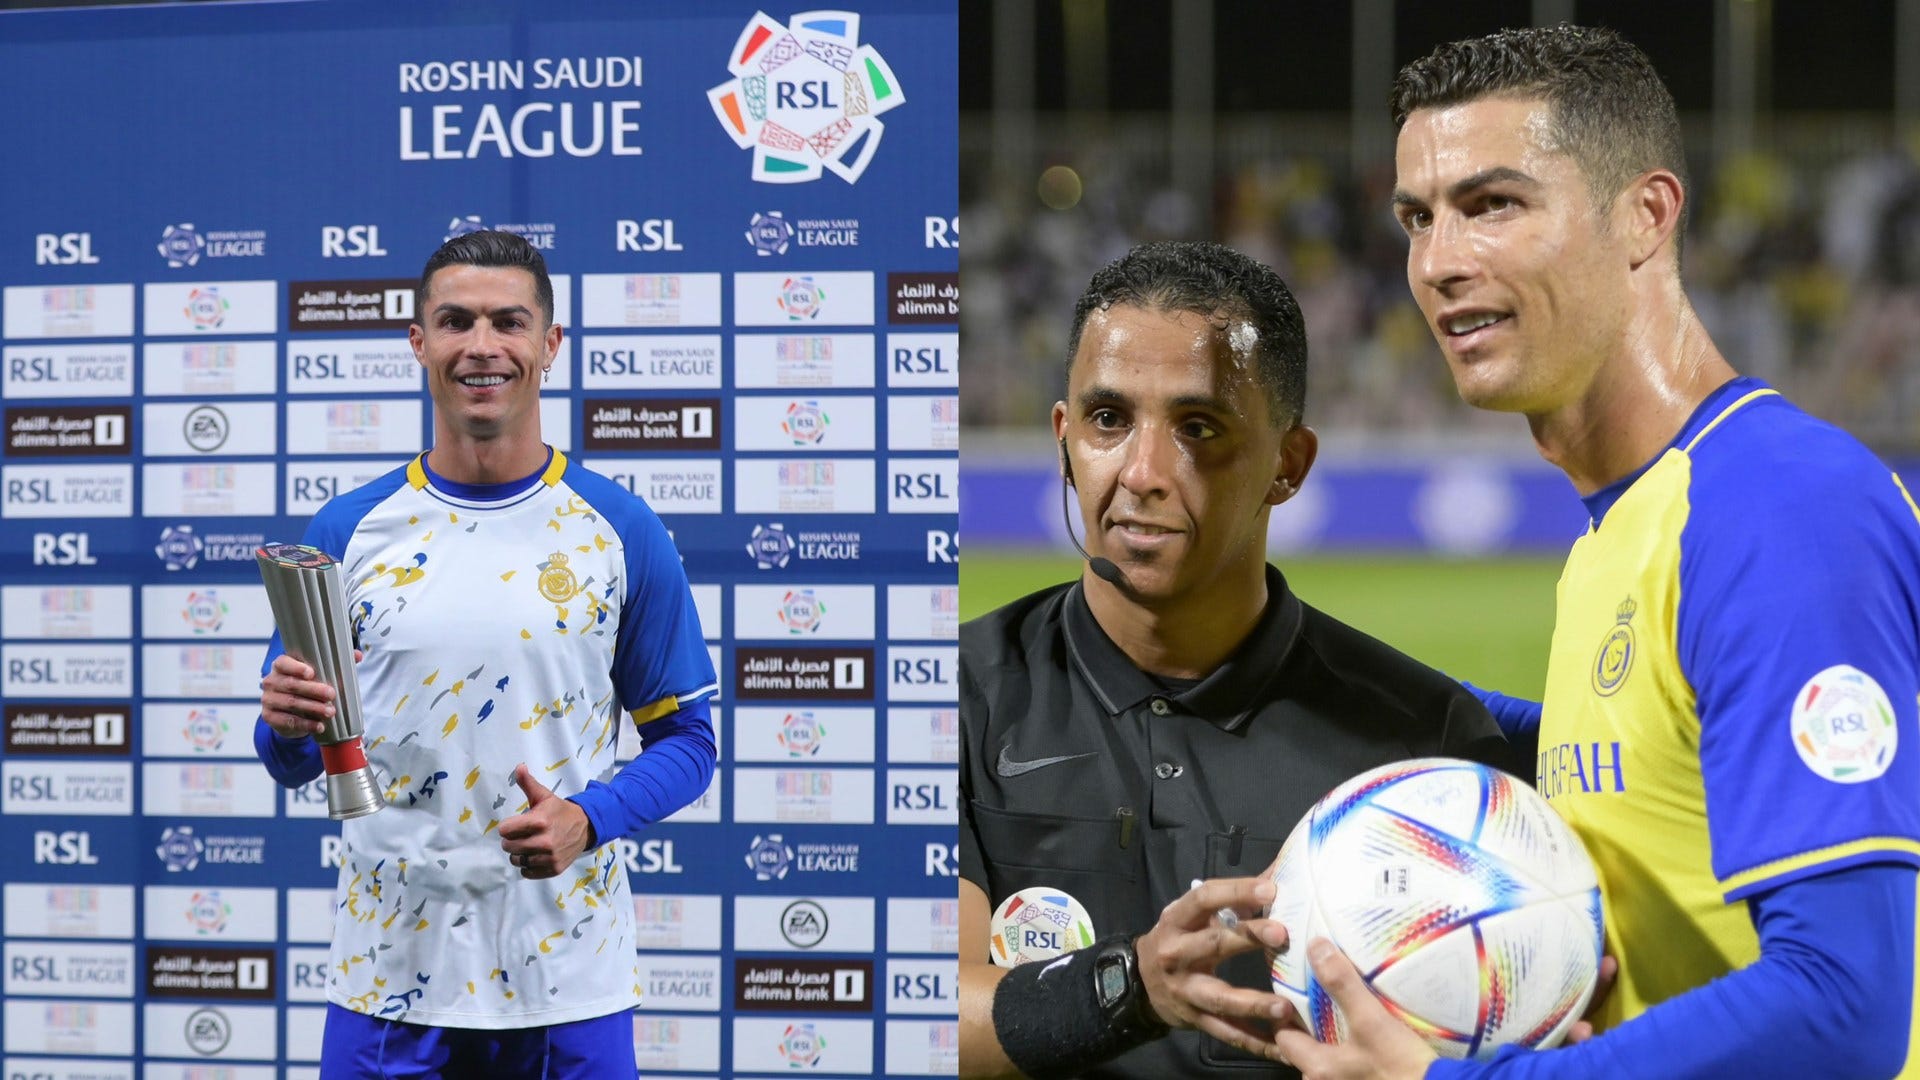 Ronaldo al Nasr. Saudi vs MLS. Saudi Pro League spending. Saudi pro league